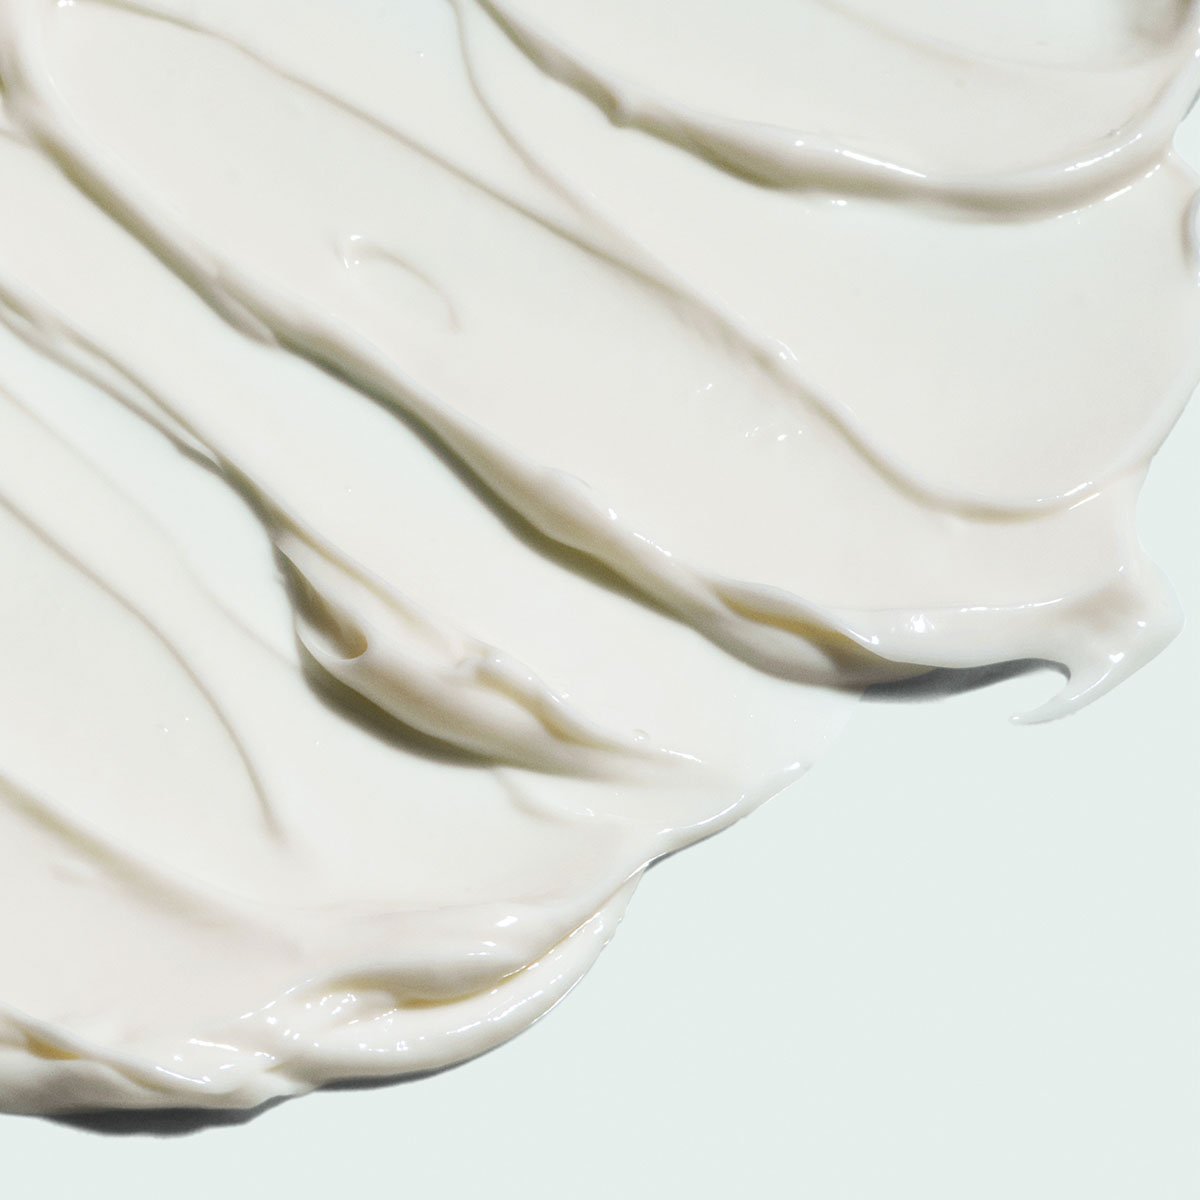 VITAL C hydrating repair crème - Image Skincare Australia